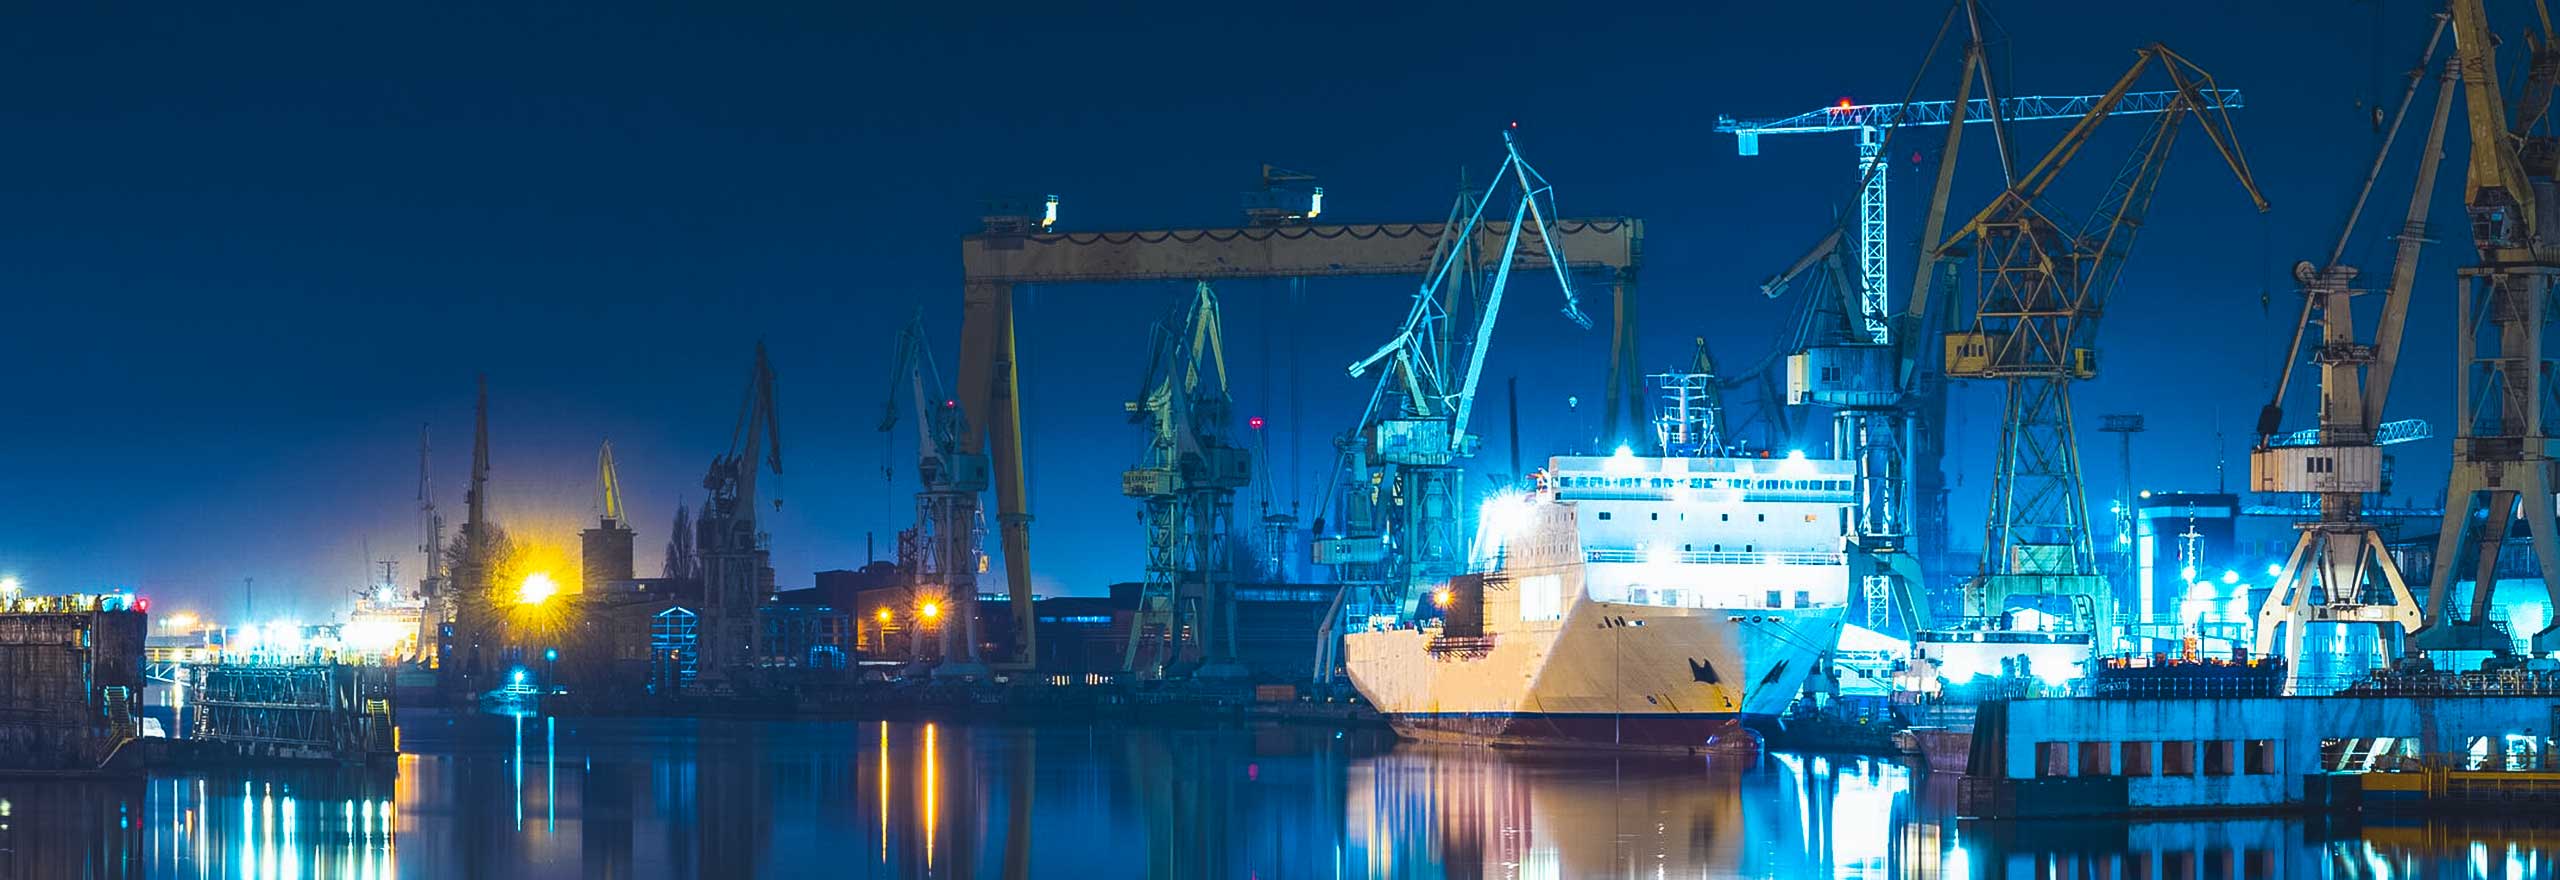 area industri galangan kapal di Polandia